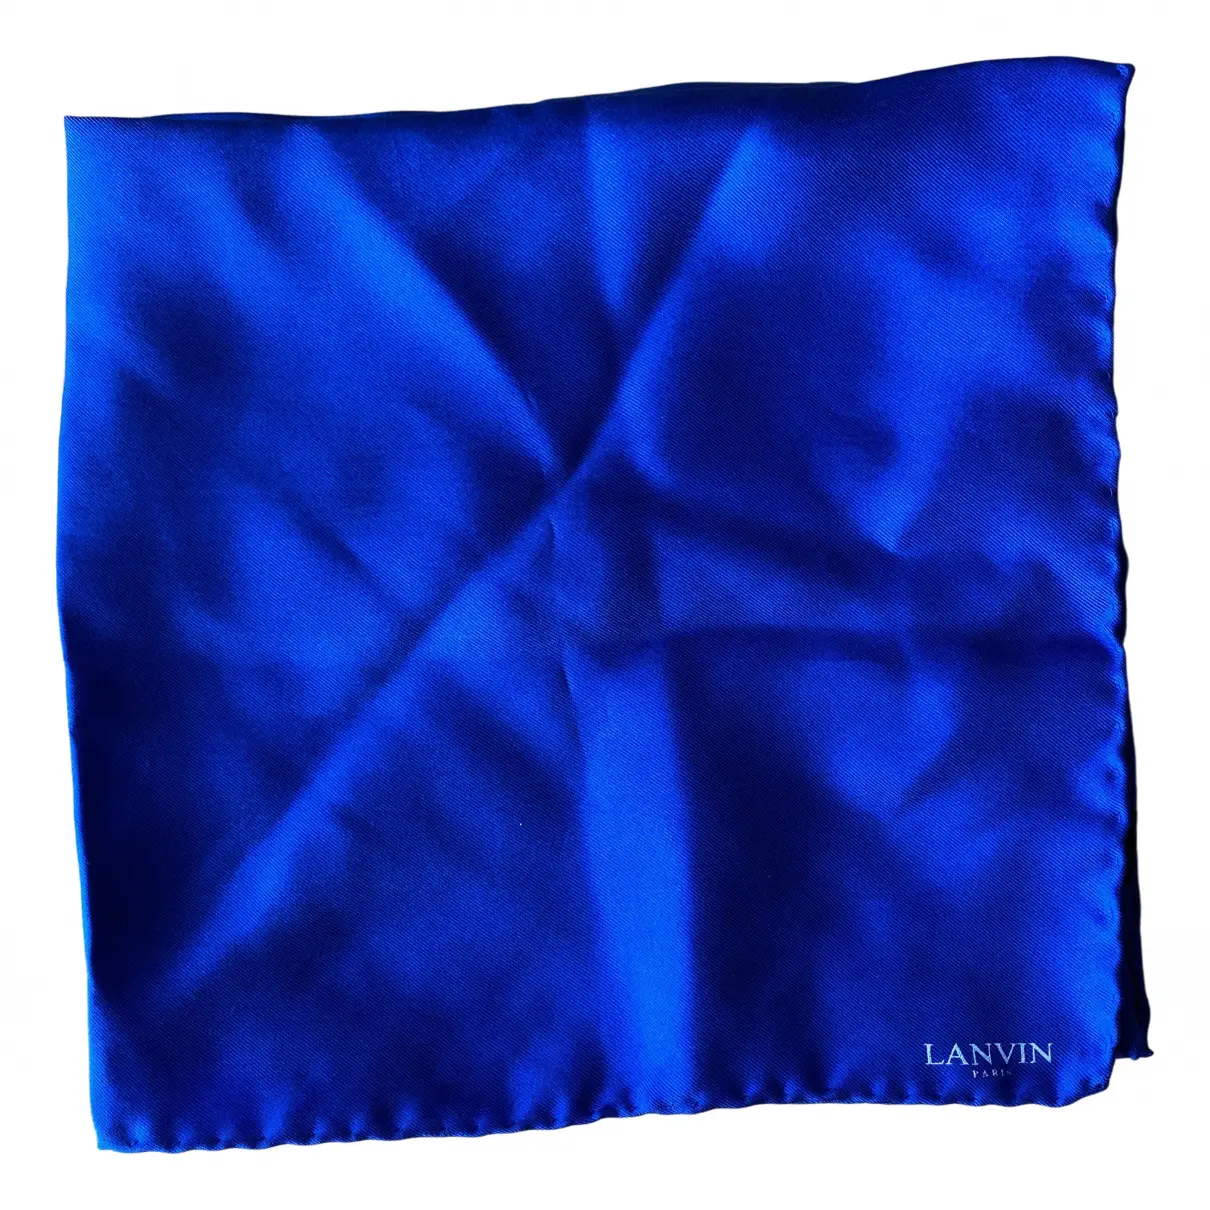 Buy Lanvin Silk scarf & pocket square online